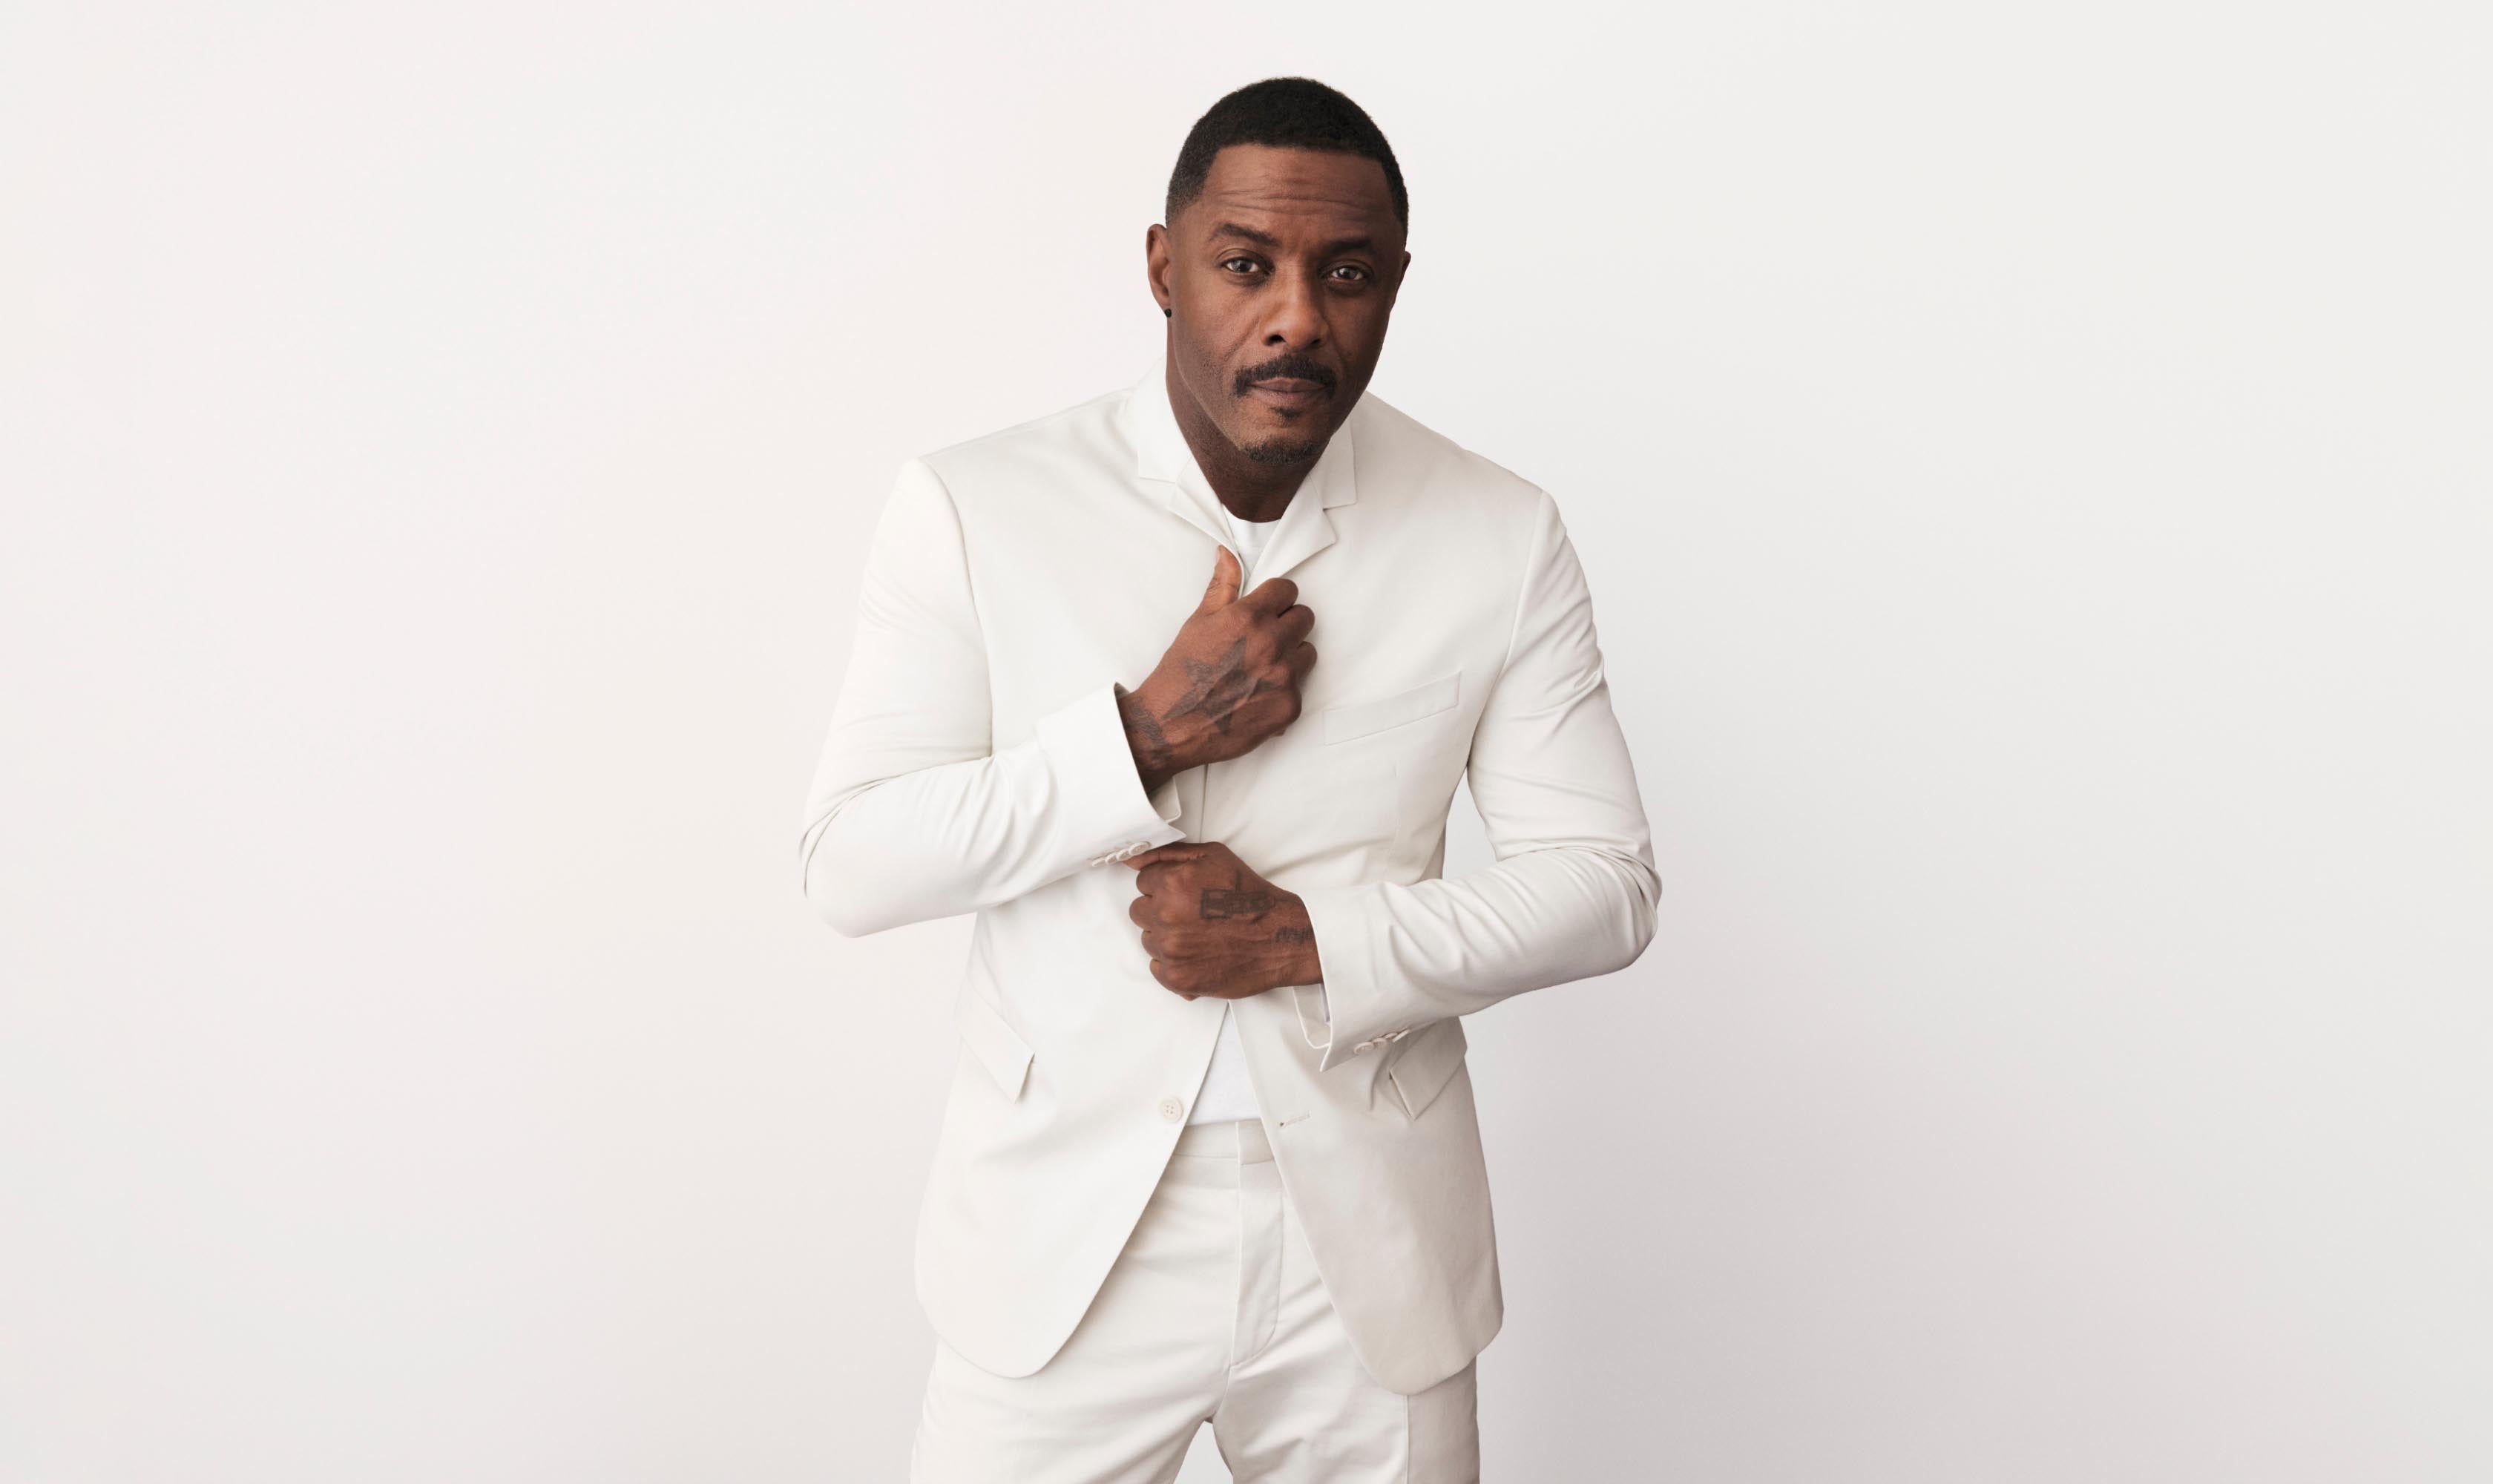 Idris Elba wearing a white linen suit